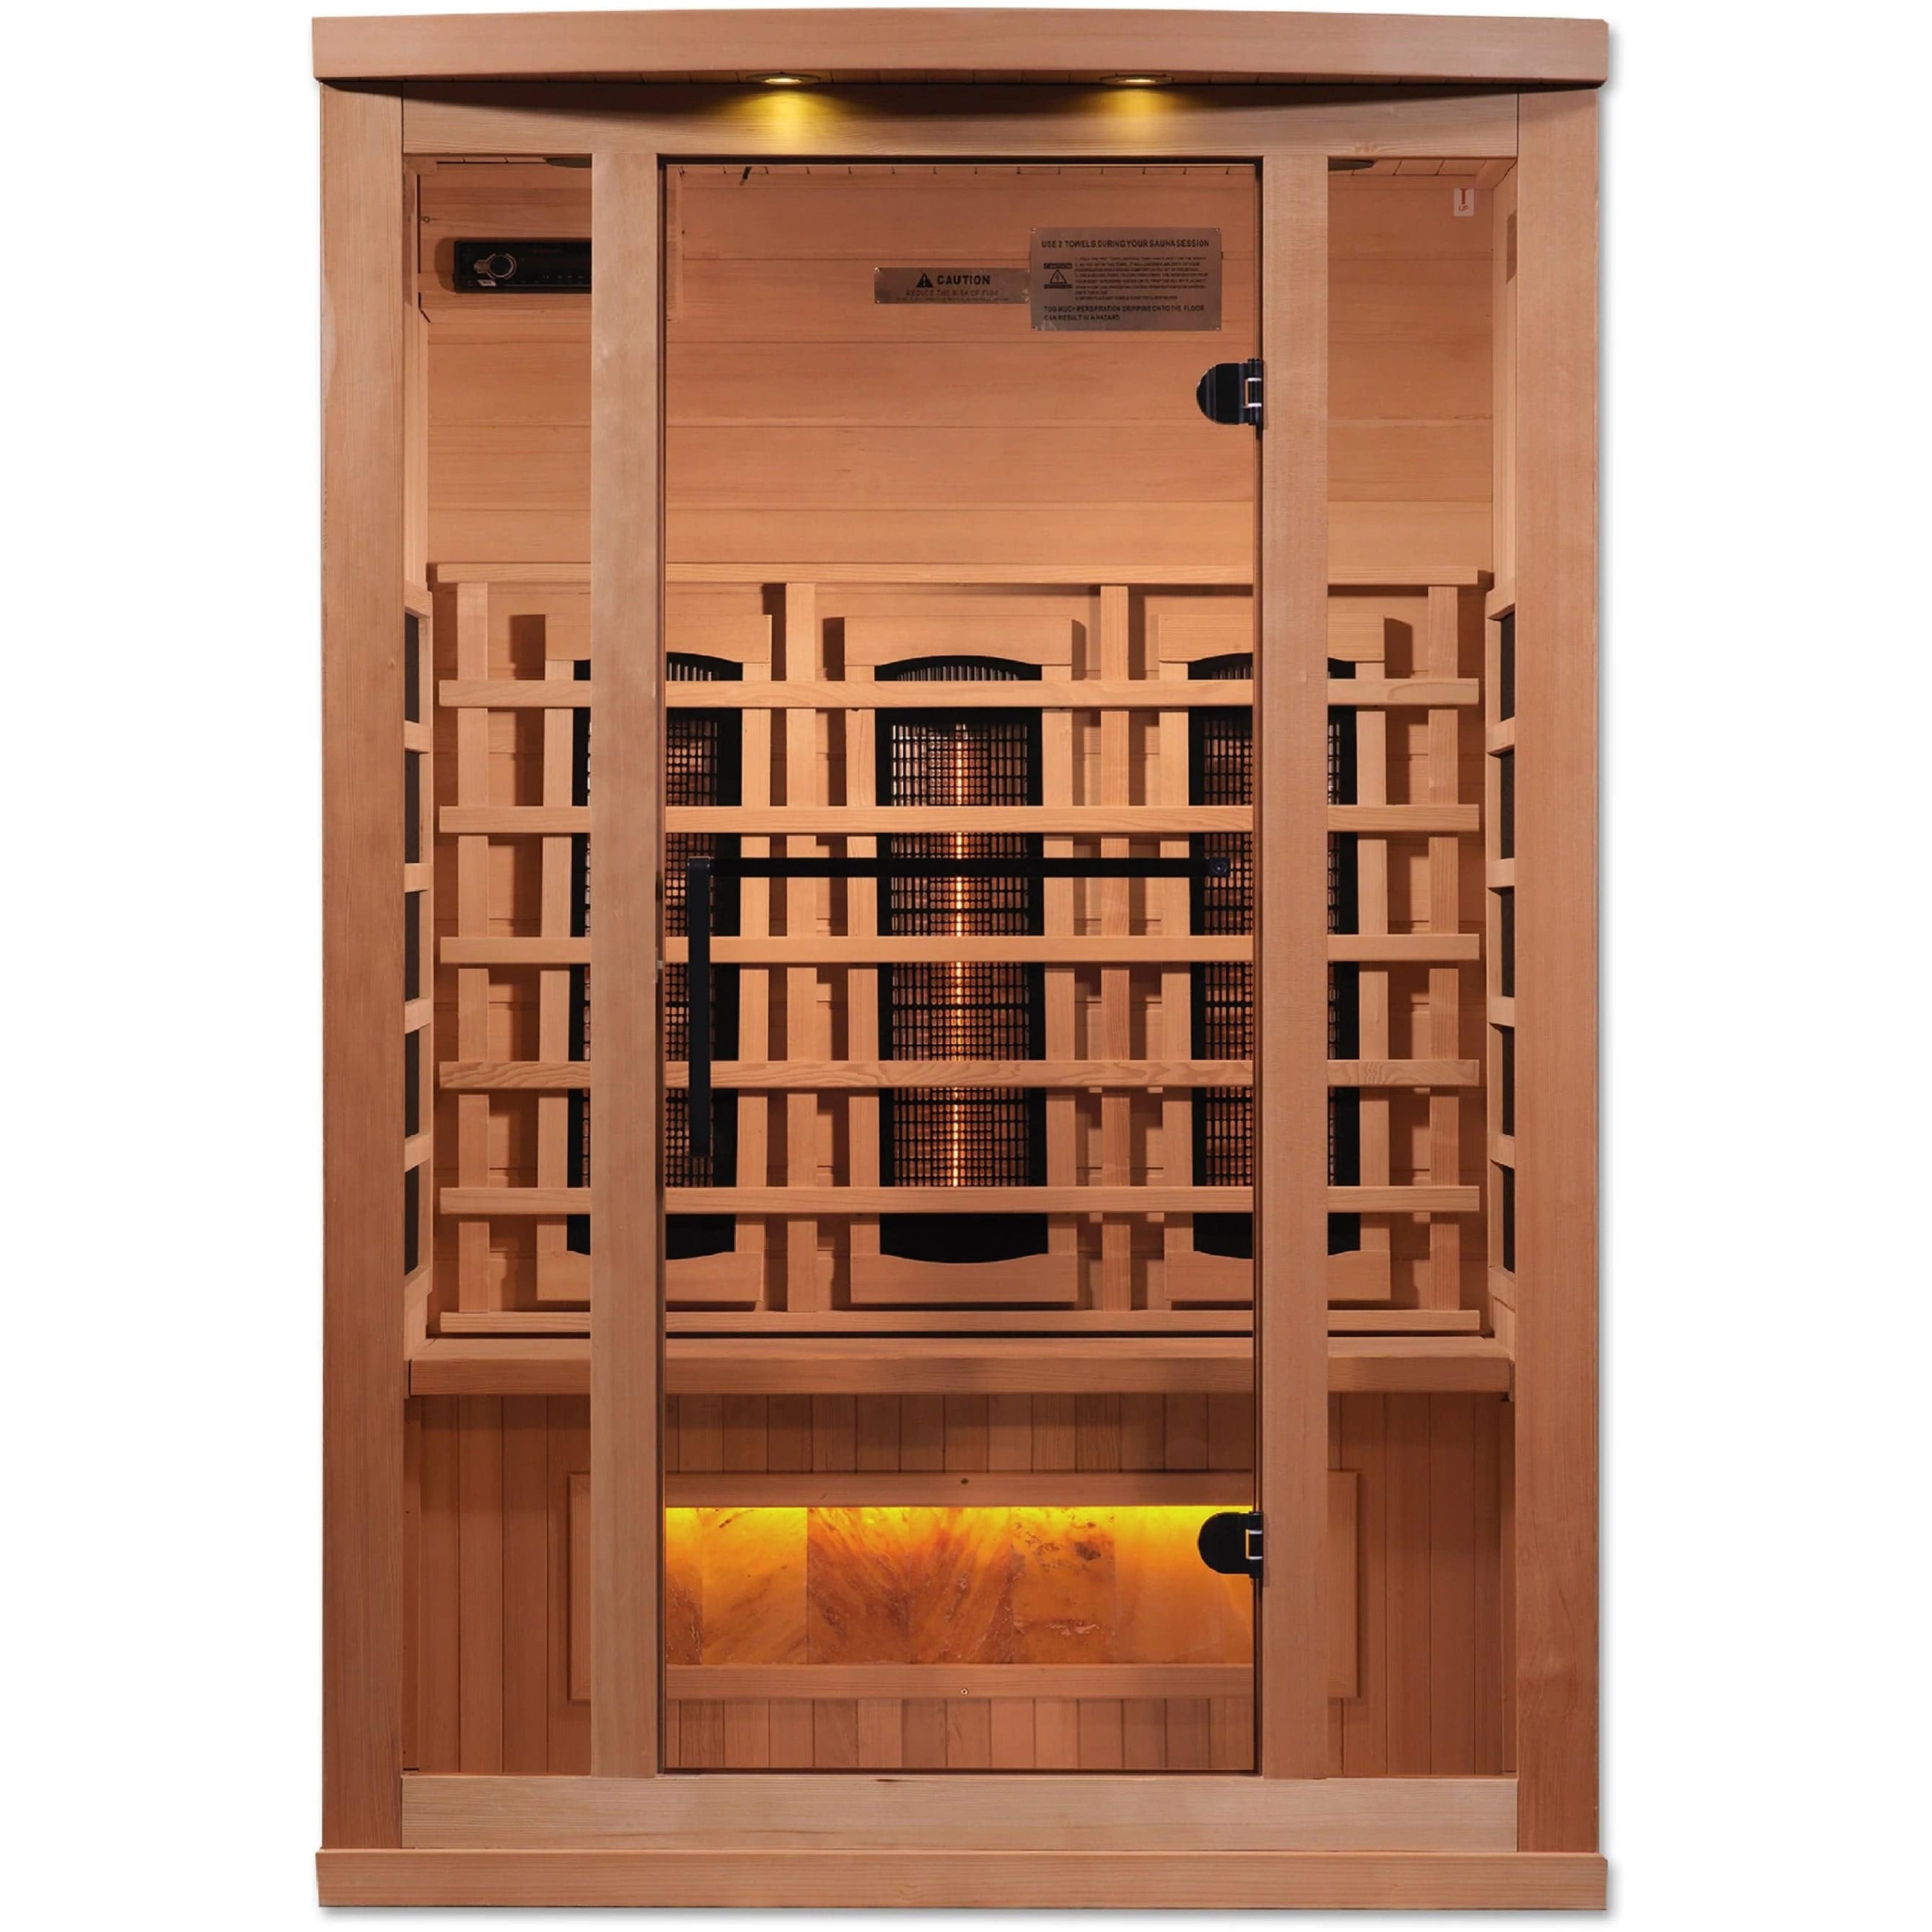 Golden Designs Reserve Edition Full Spectrum Indoor 2 Person Far Infrared Sauna